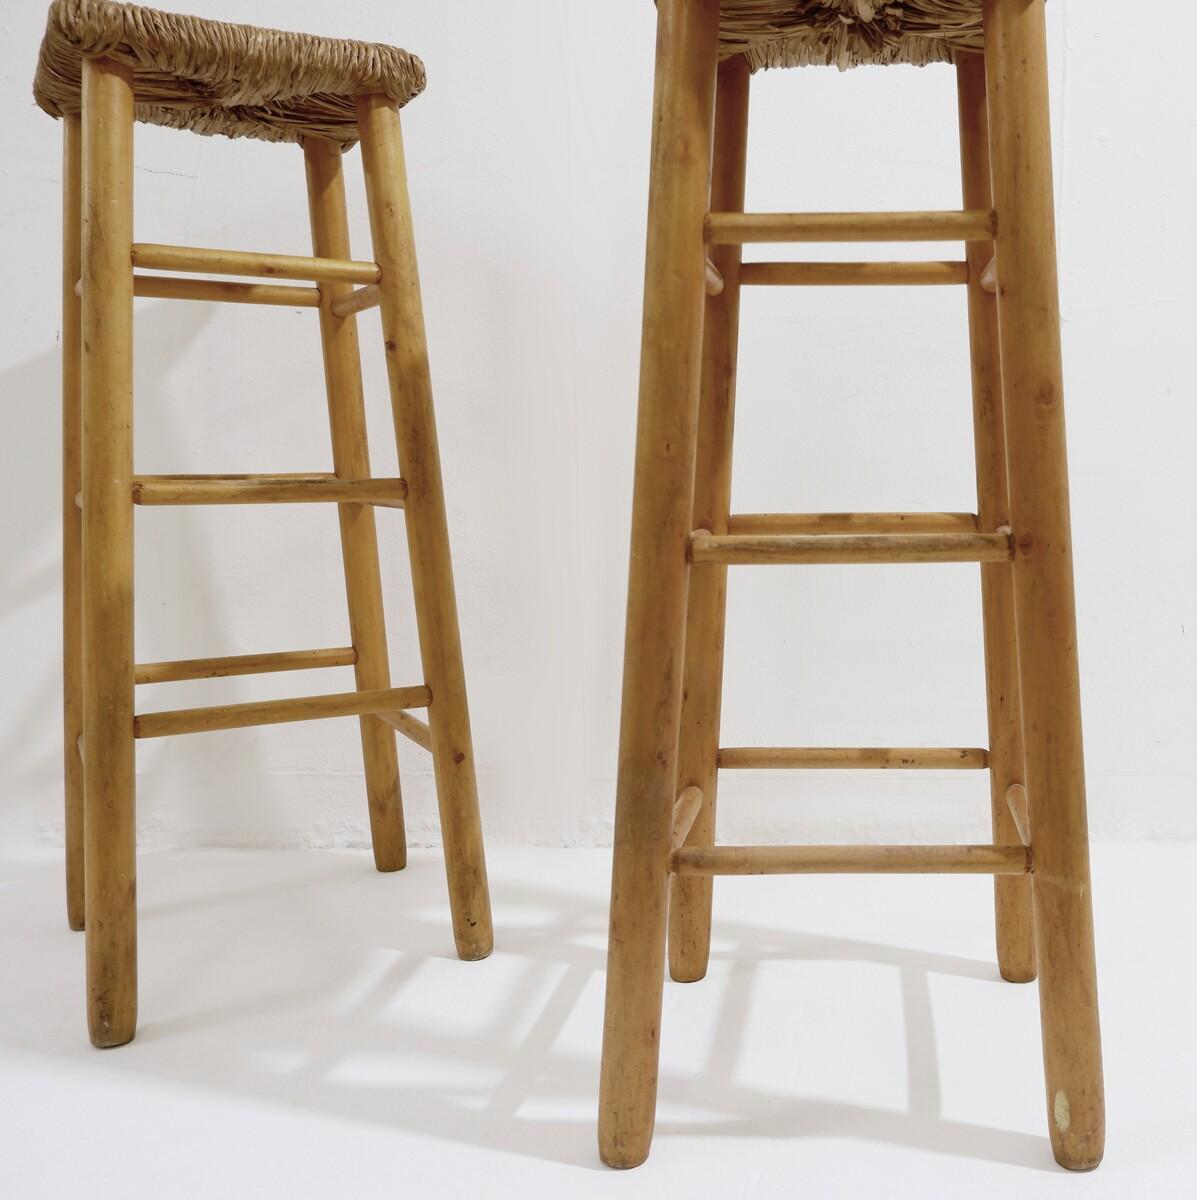 Mid-century wood woven rush bar stools, 70s - 2 available.